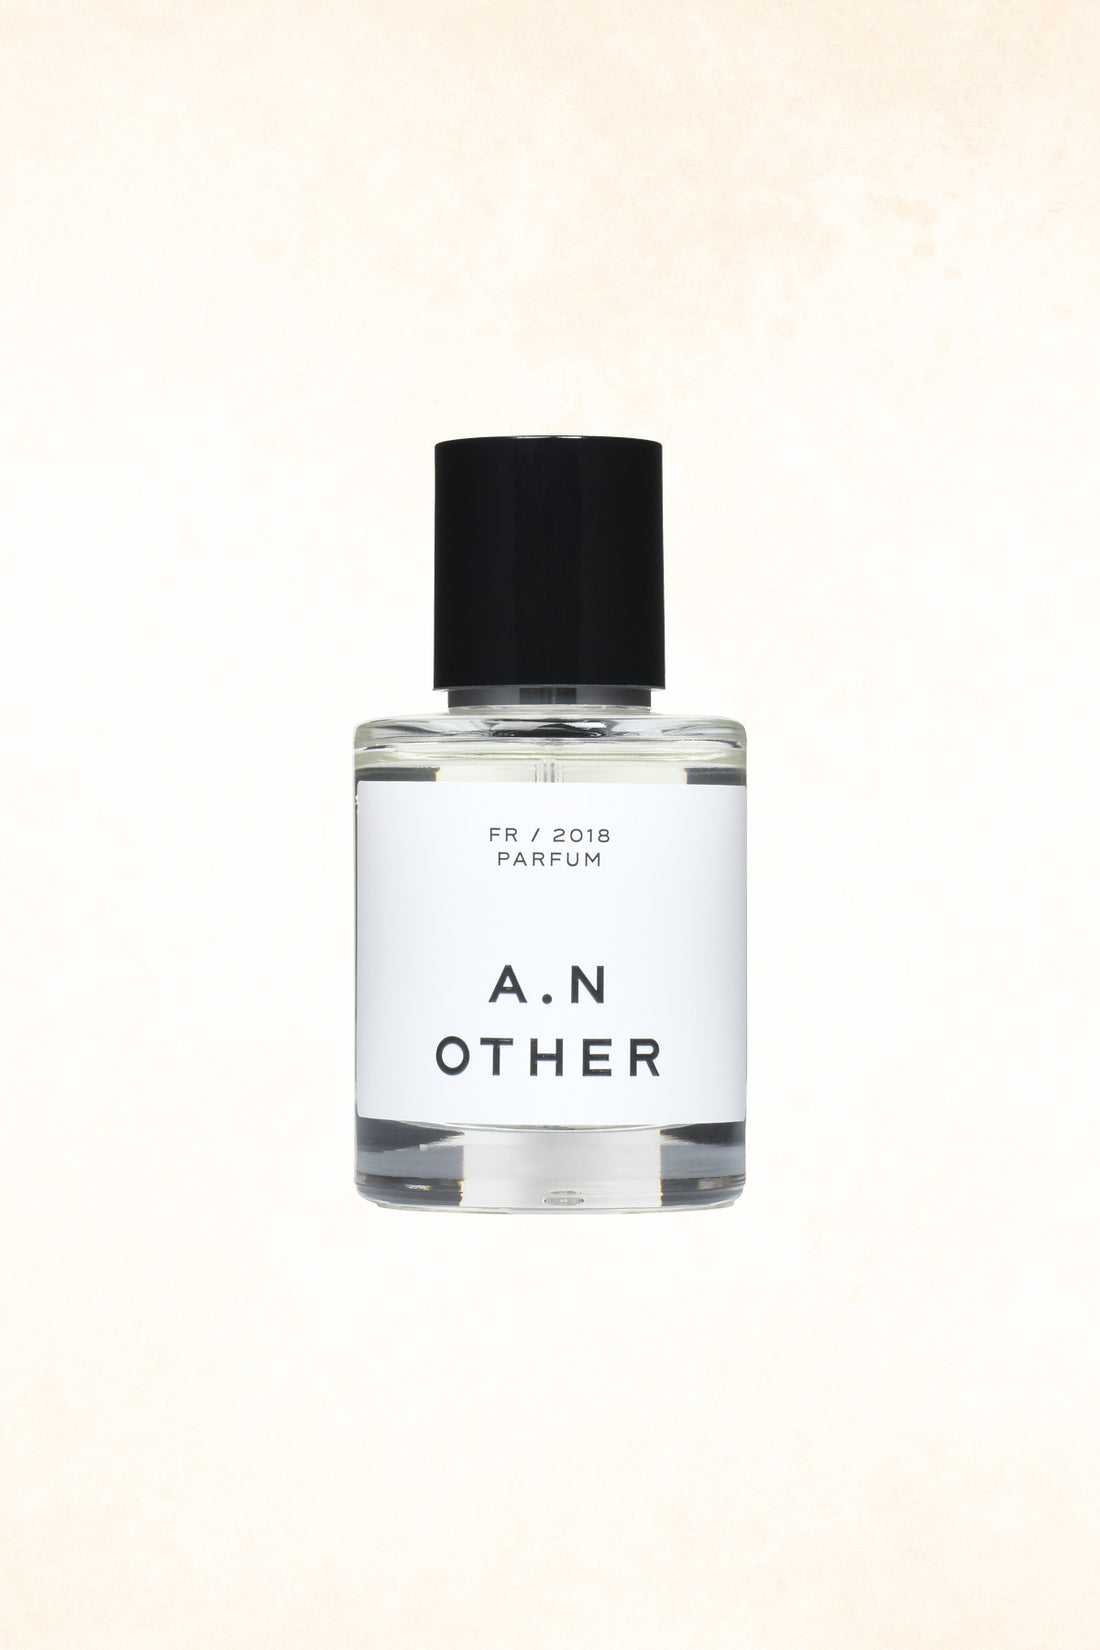 A.N OTHER – FR/2018 Parfum - 50 ml